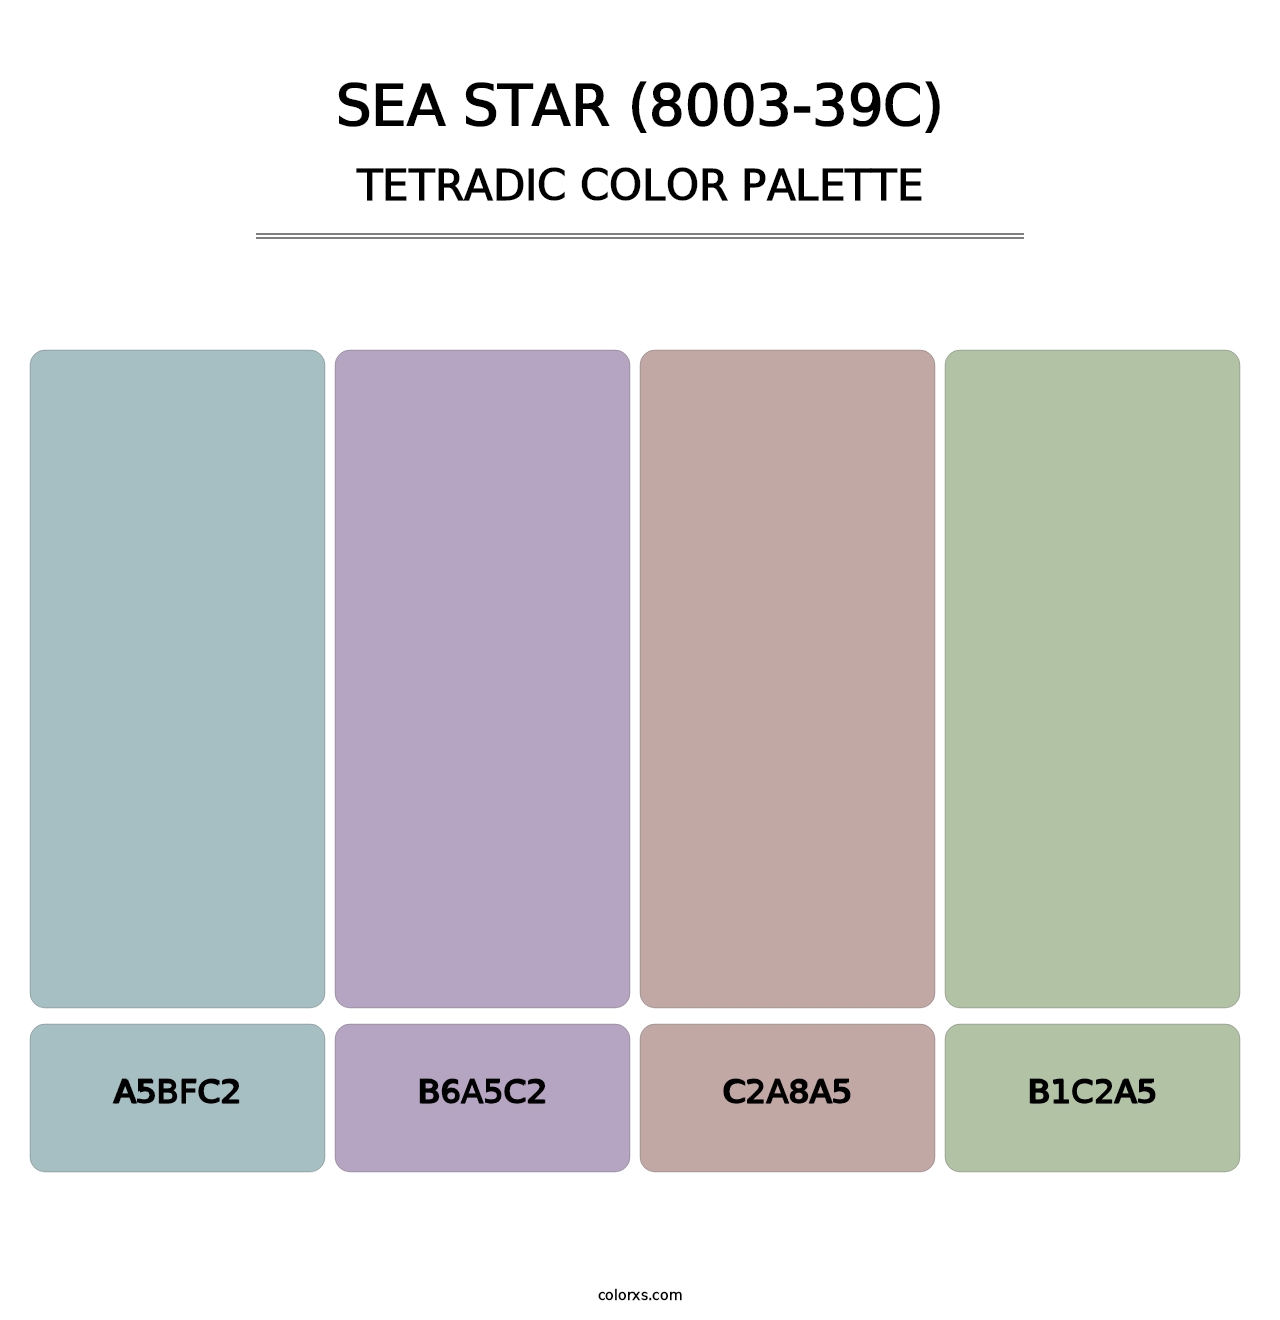 Sea Star (8003-39C) - Tetradic Color Palette